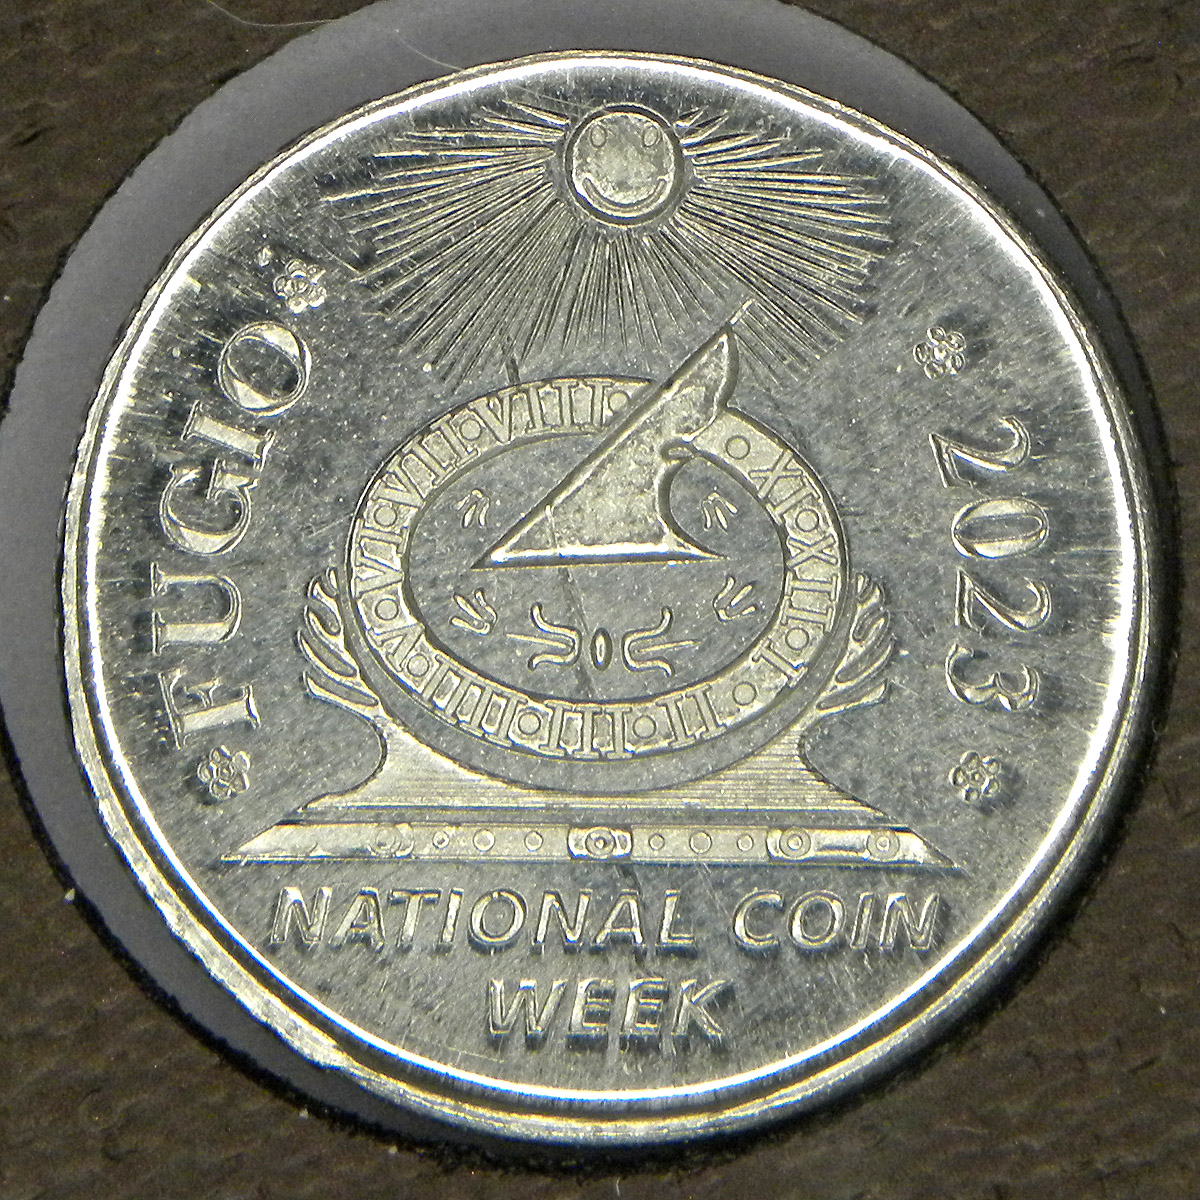 2023 National Coin Week token (obverse)